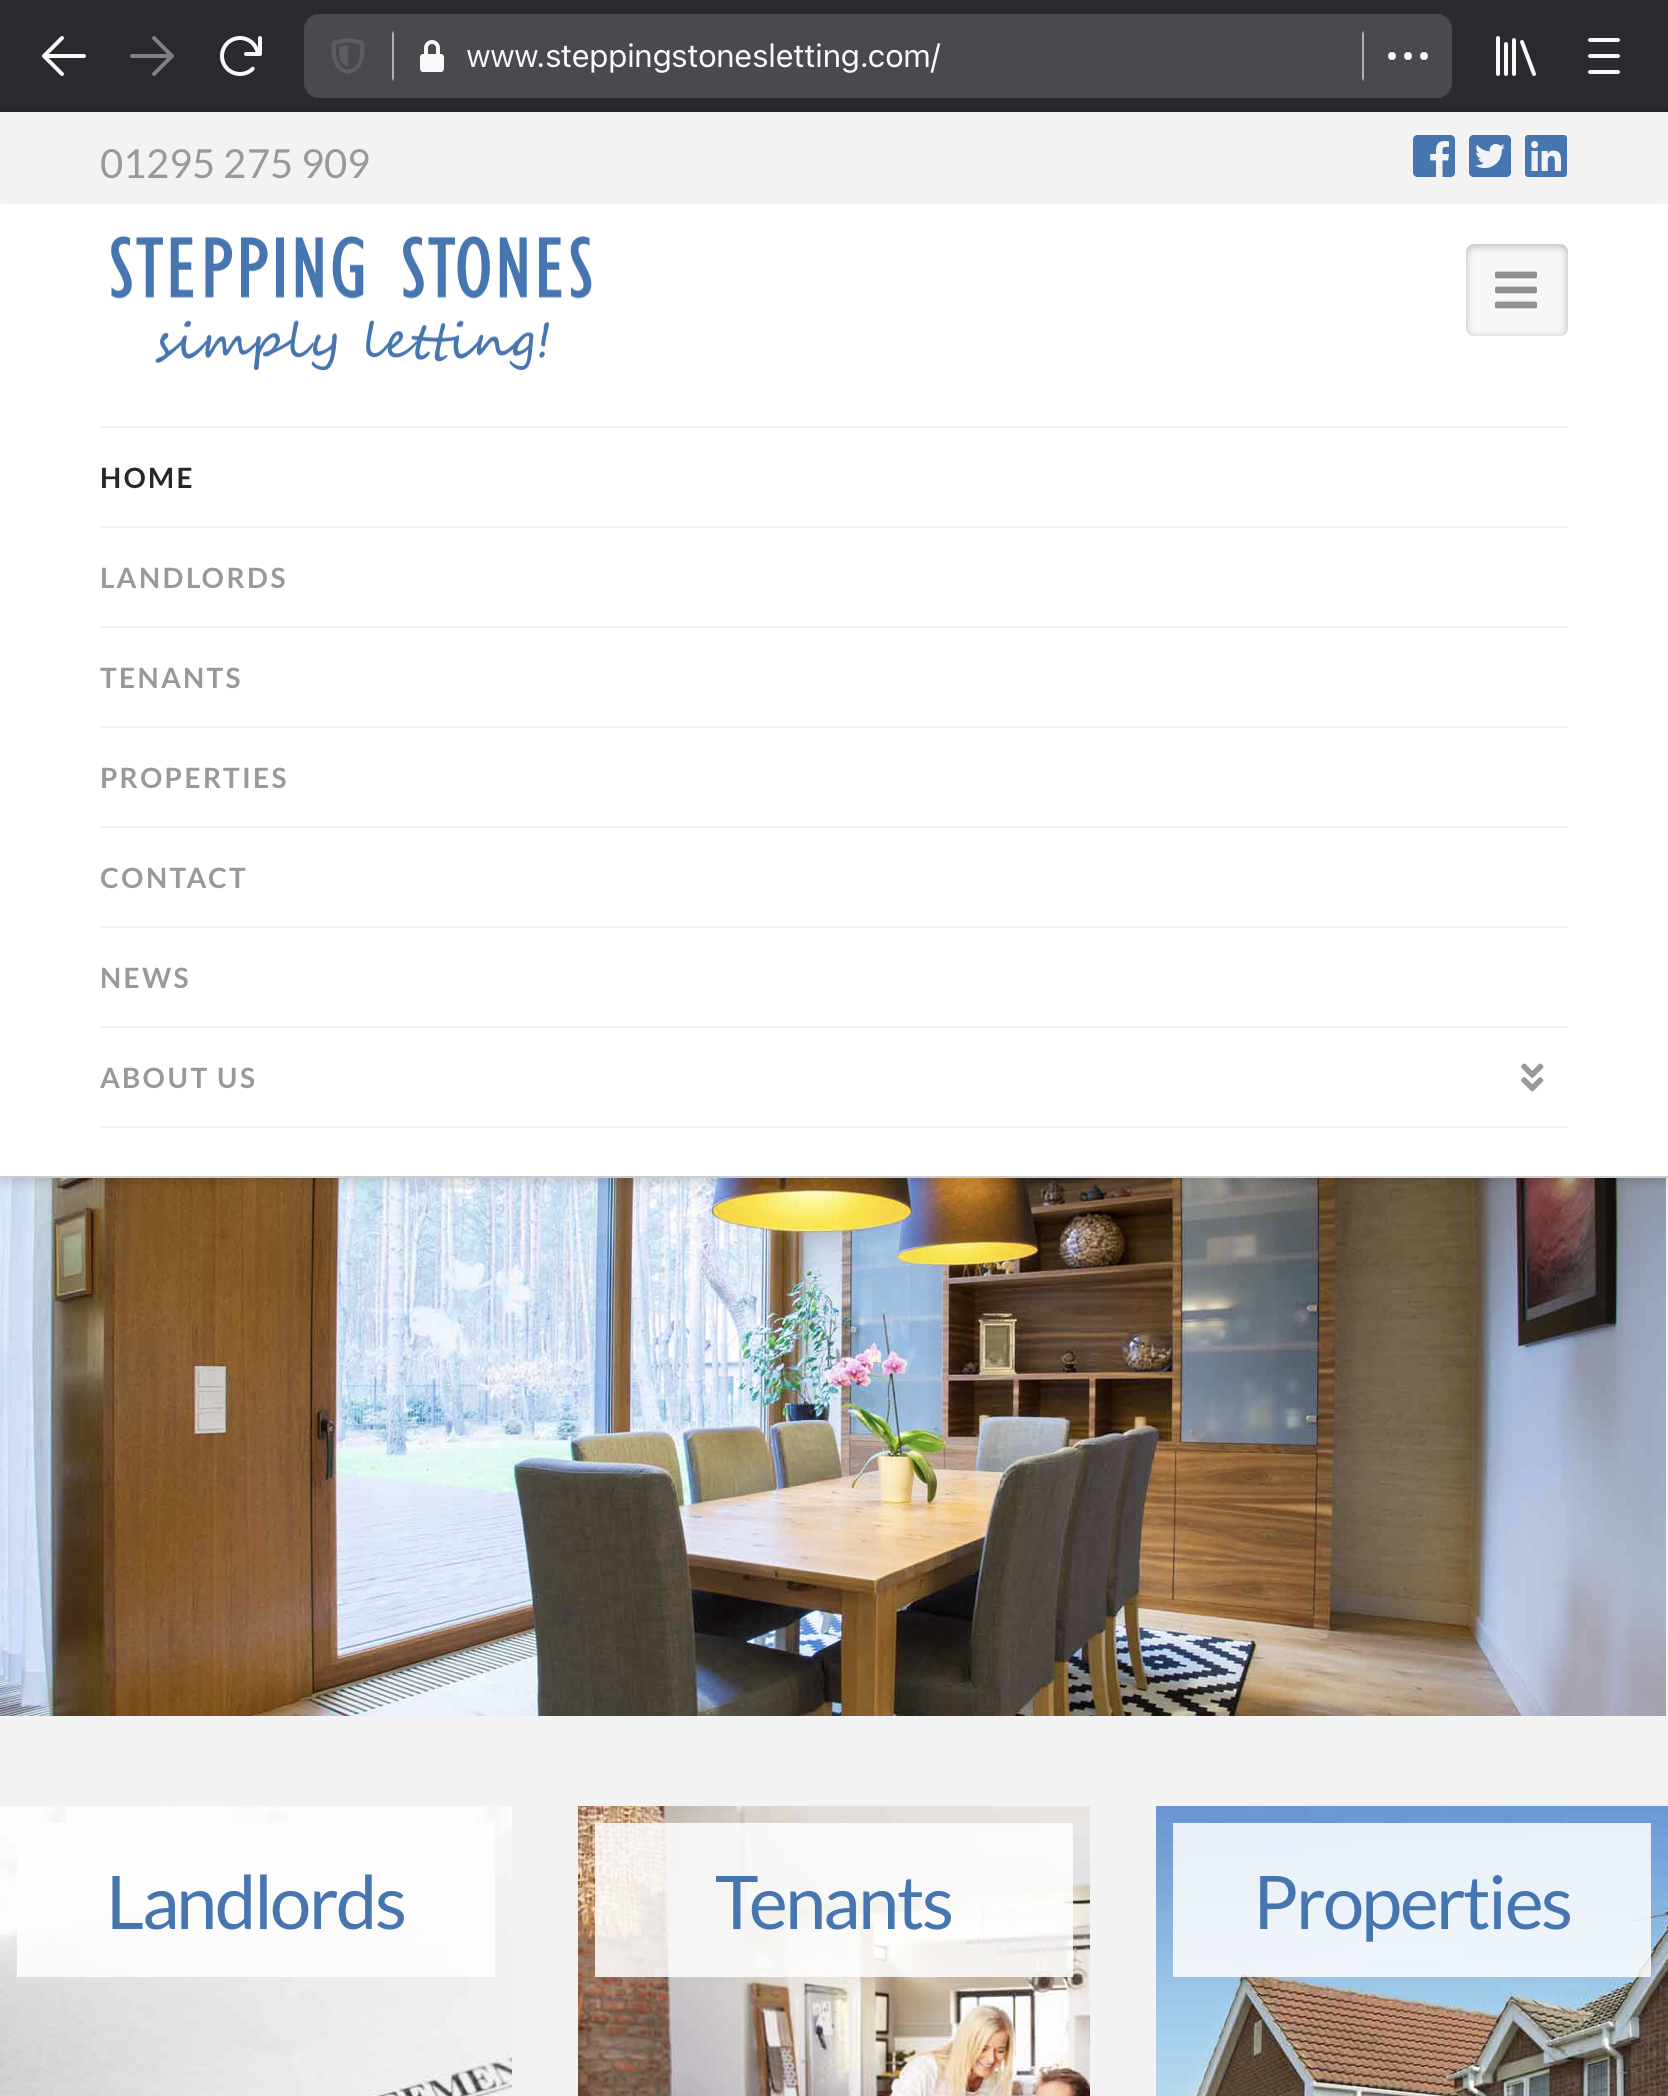 steppingh stones letting website homepage mobile menu